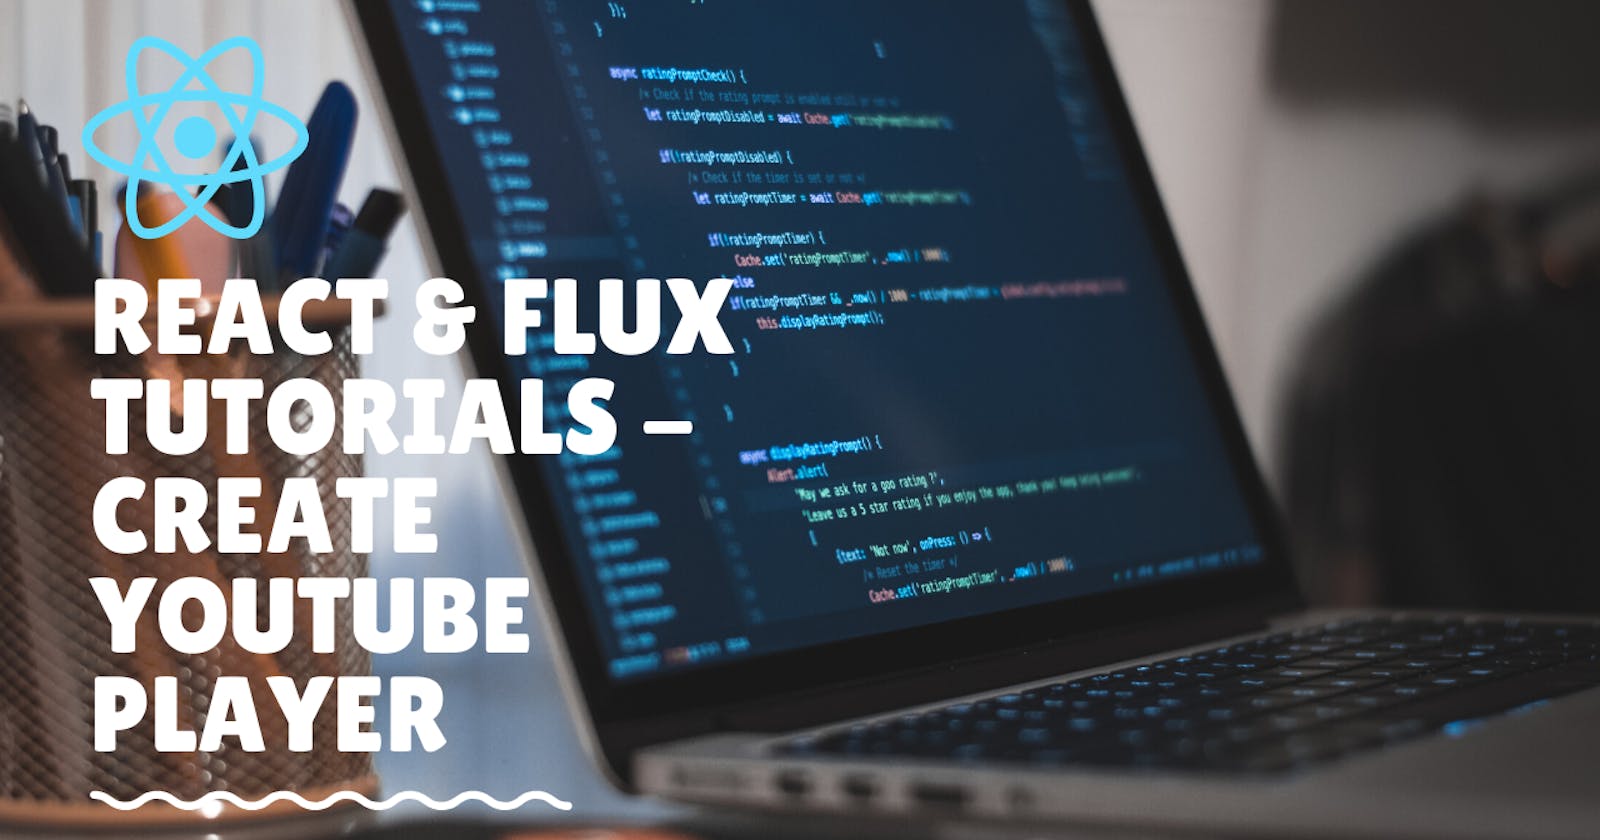 React & Flux Tutorials - Create Youtube Player - 1